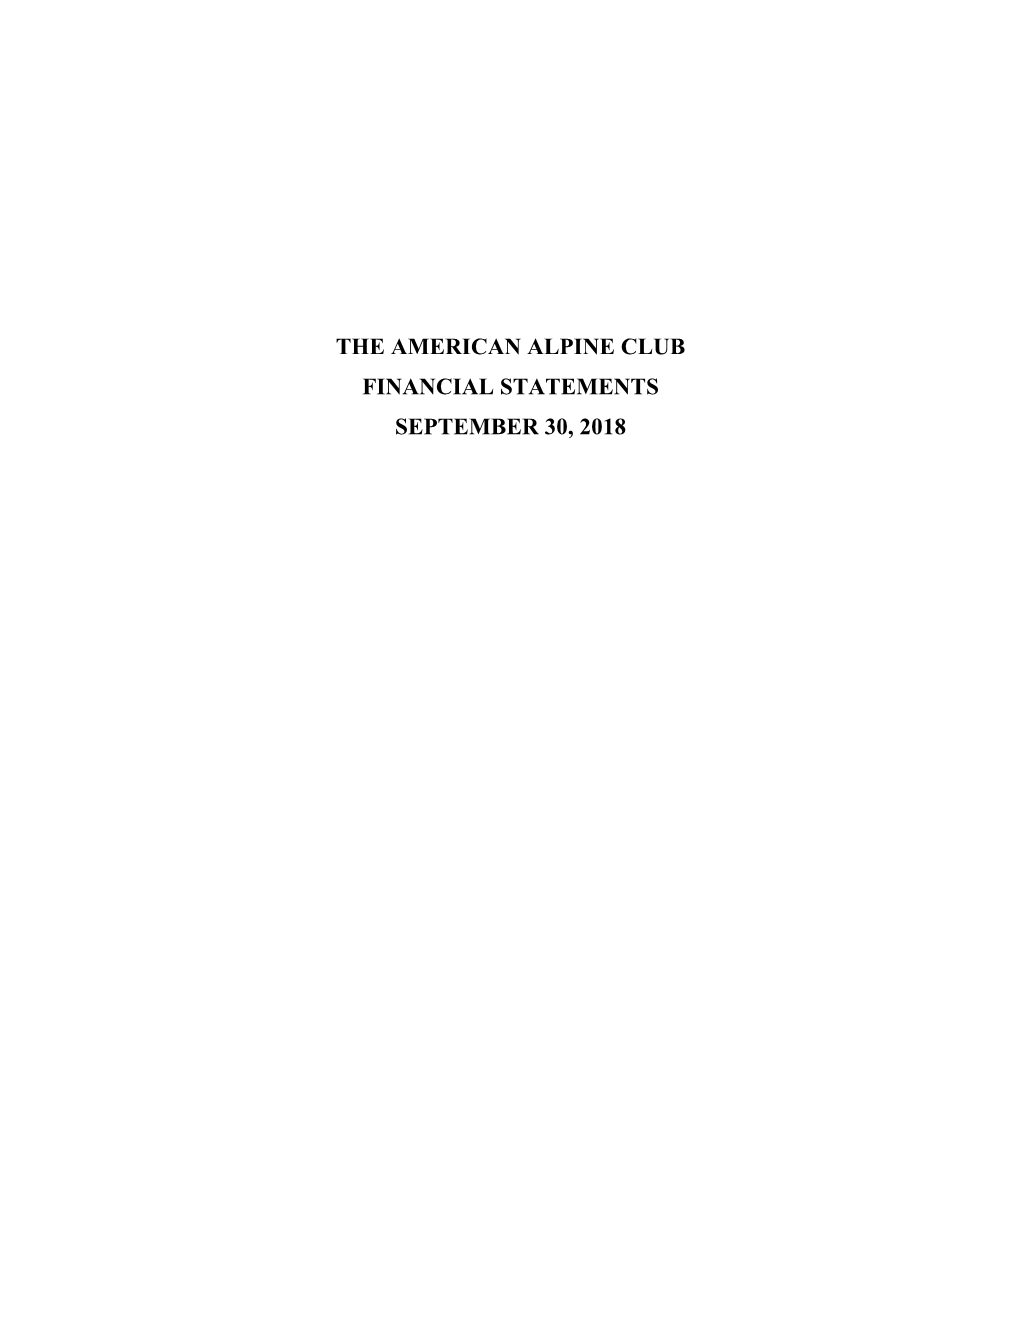 The American Alpine Club Financial Statements